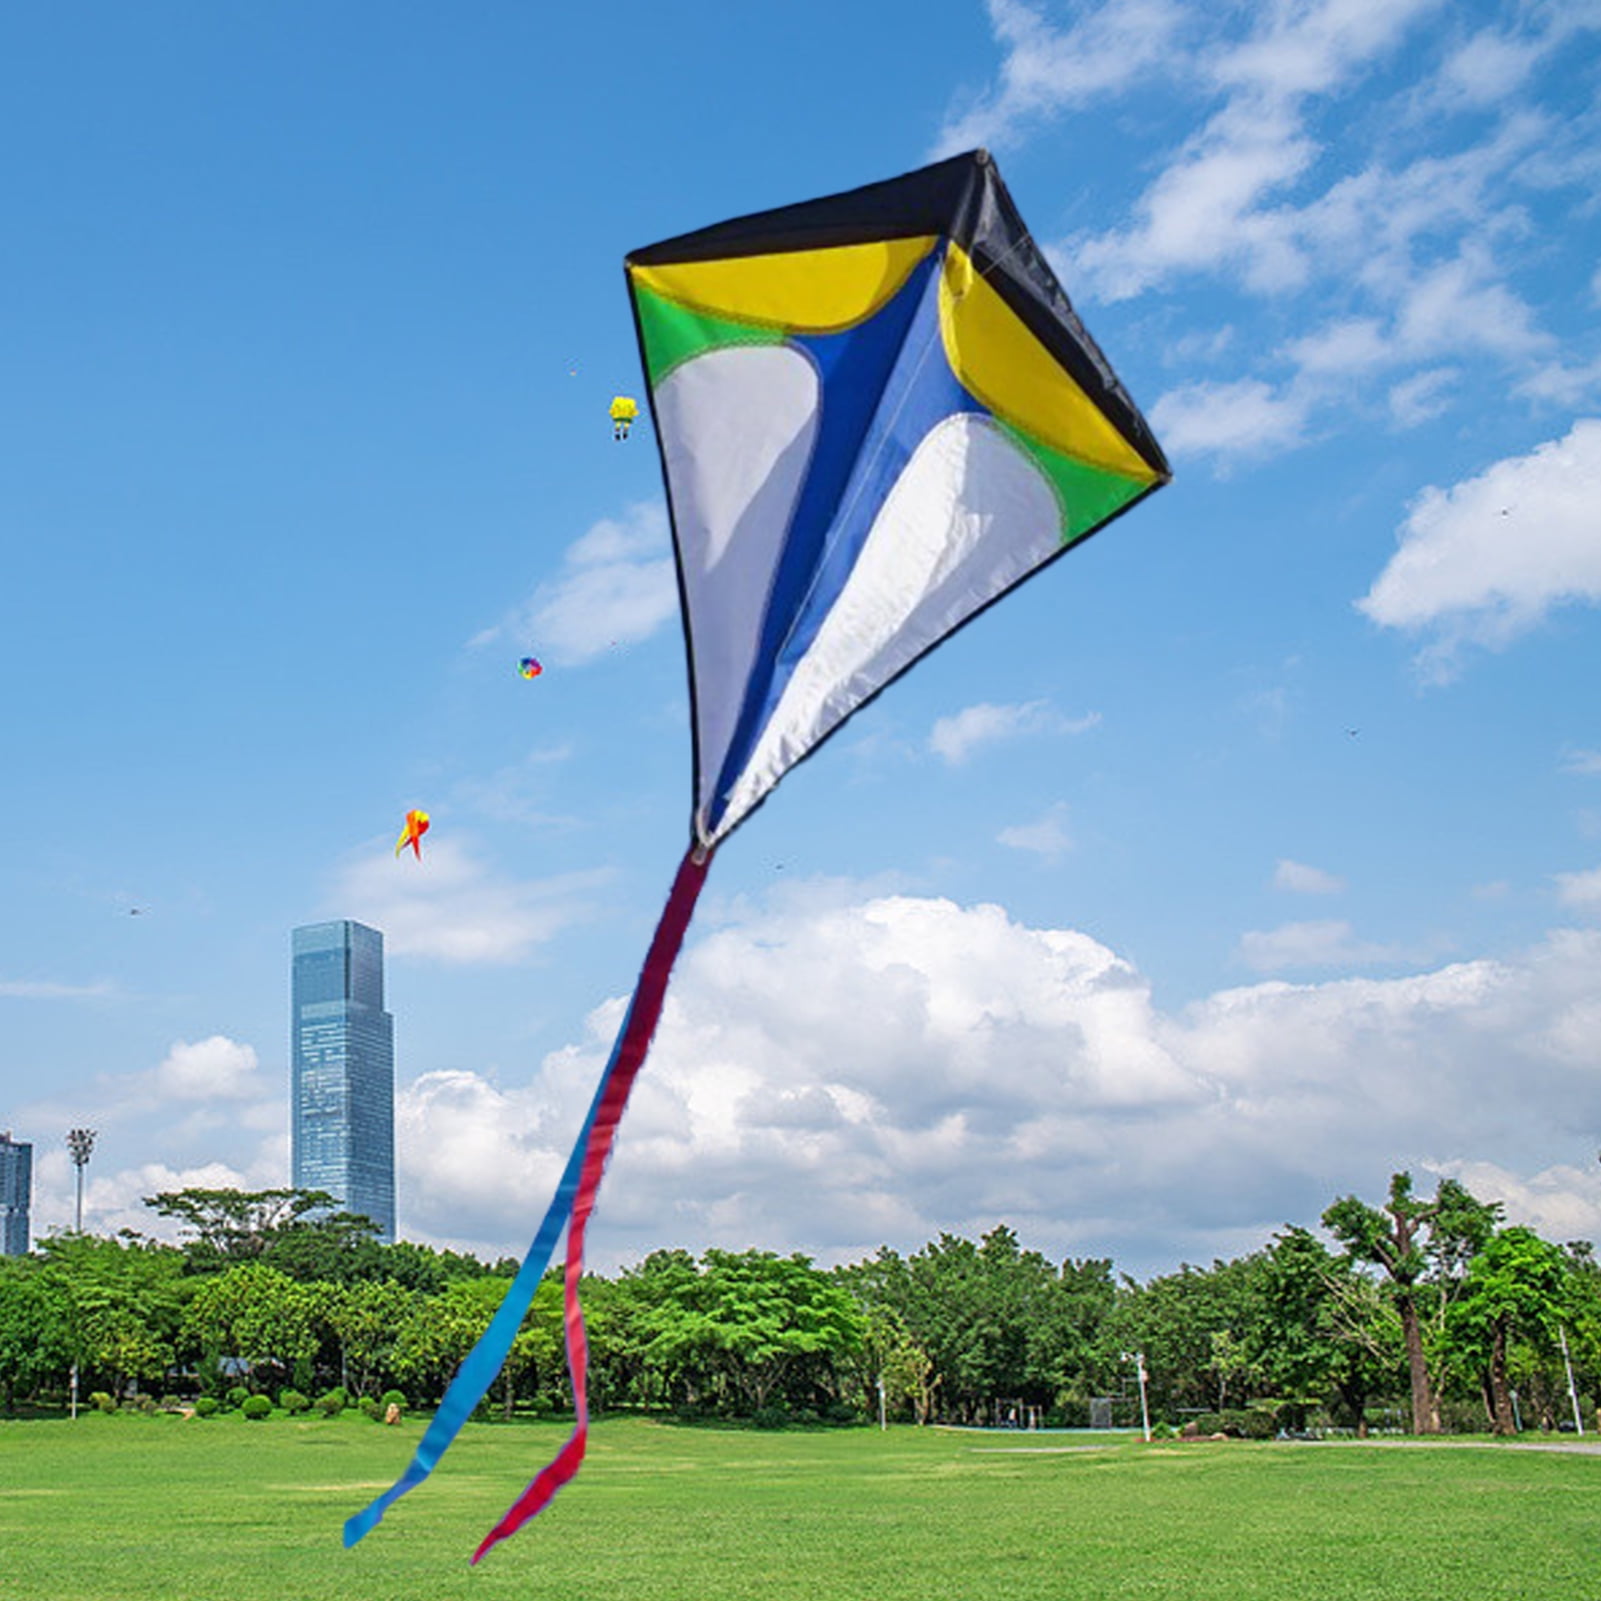 Diamond Rainbow Kite Beach Outdoor Fun Sports With 30m Line Kids Toy 